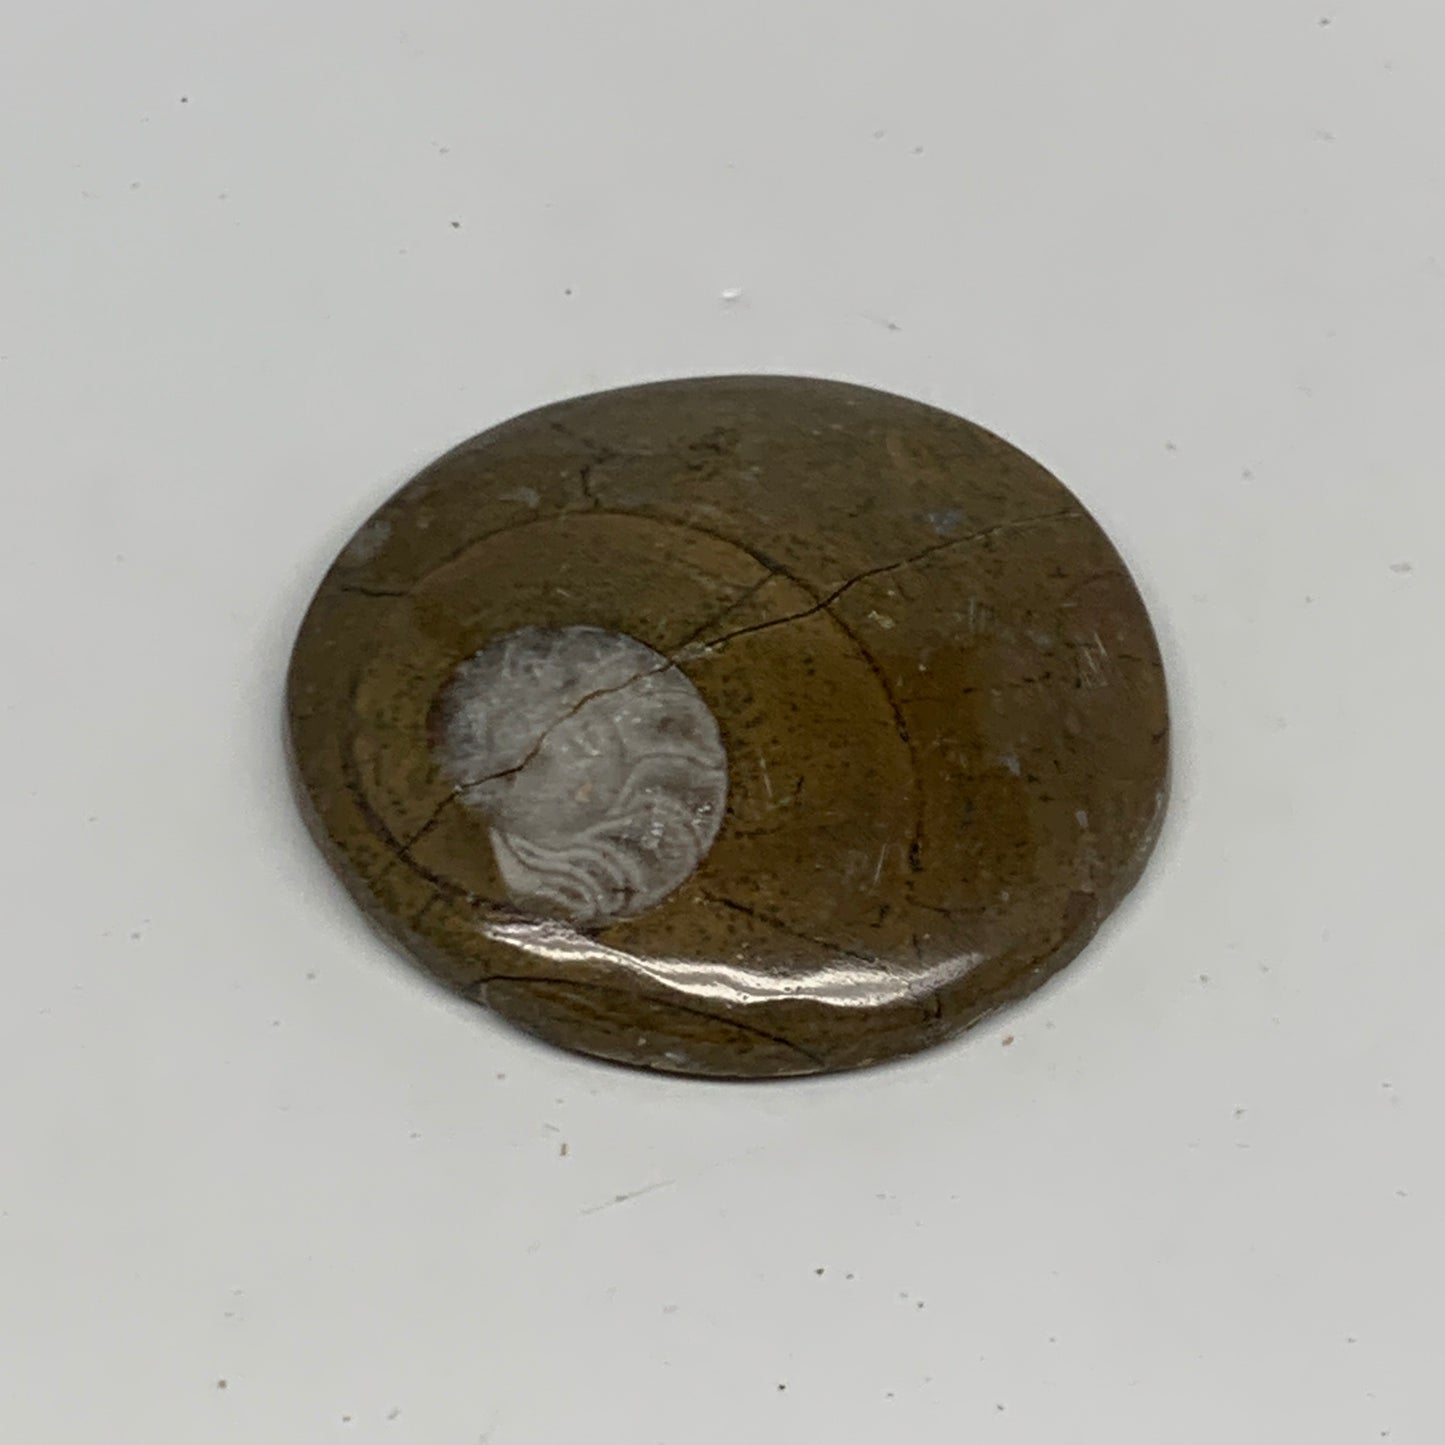 60.6g, 2.4"x2.4"x0.5", Goniatite (Button) Ammonite Polished Fossils, B30103